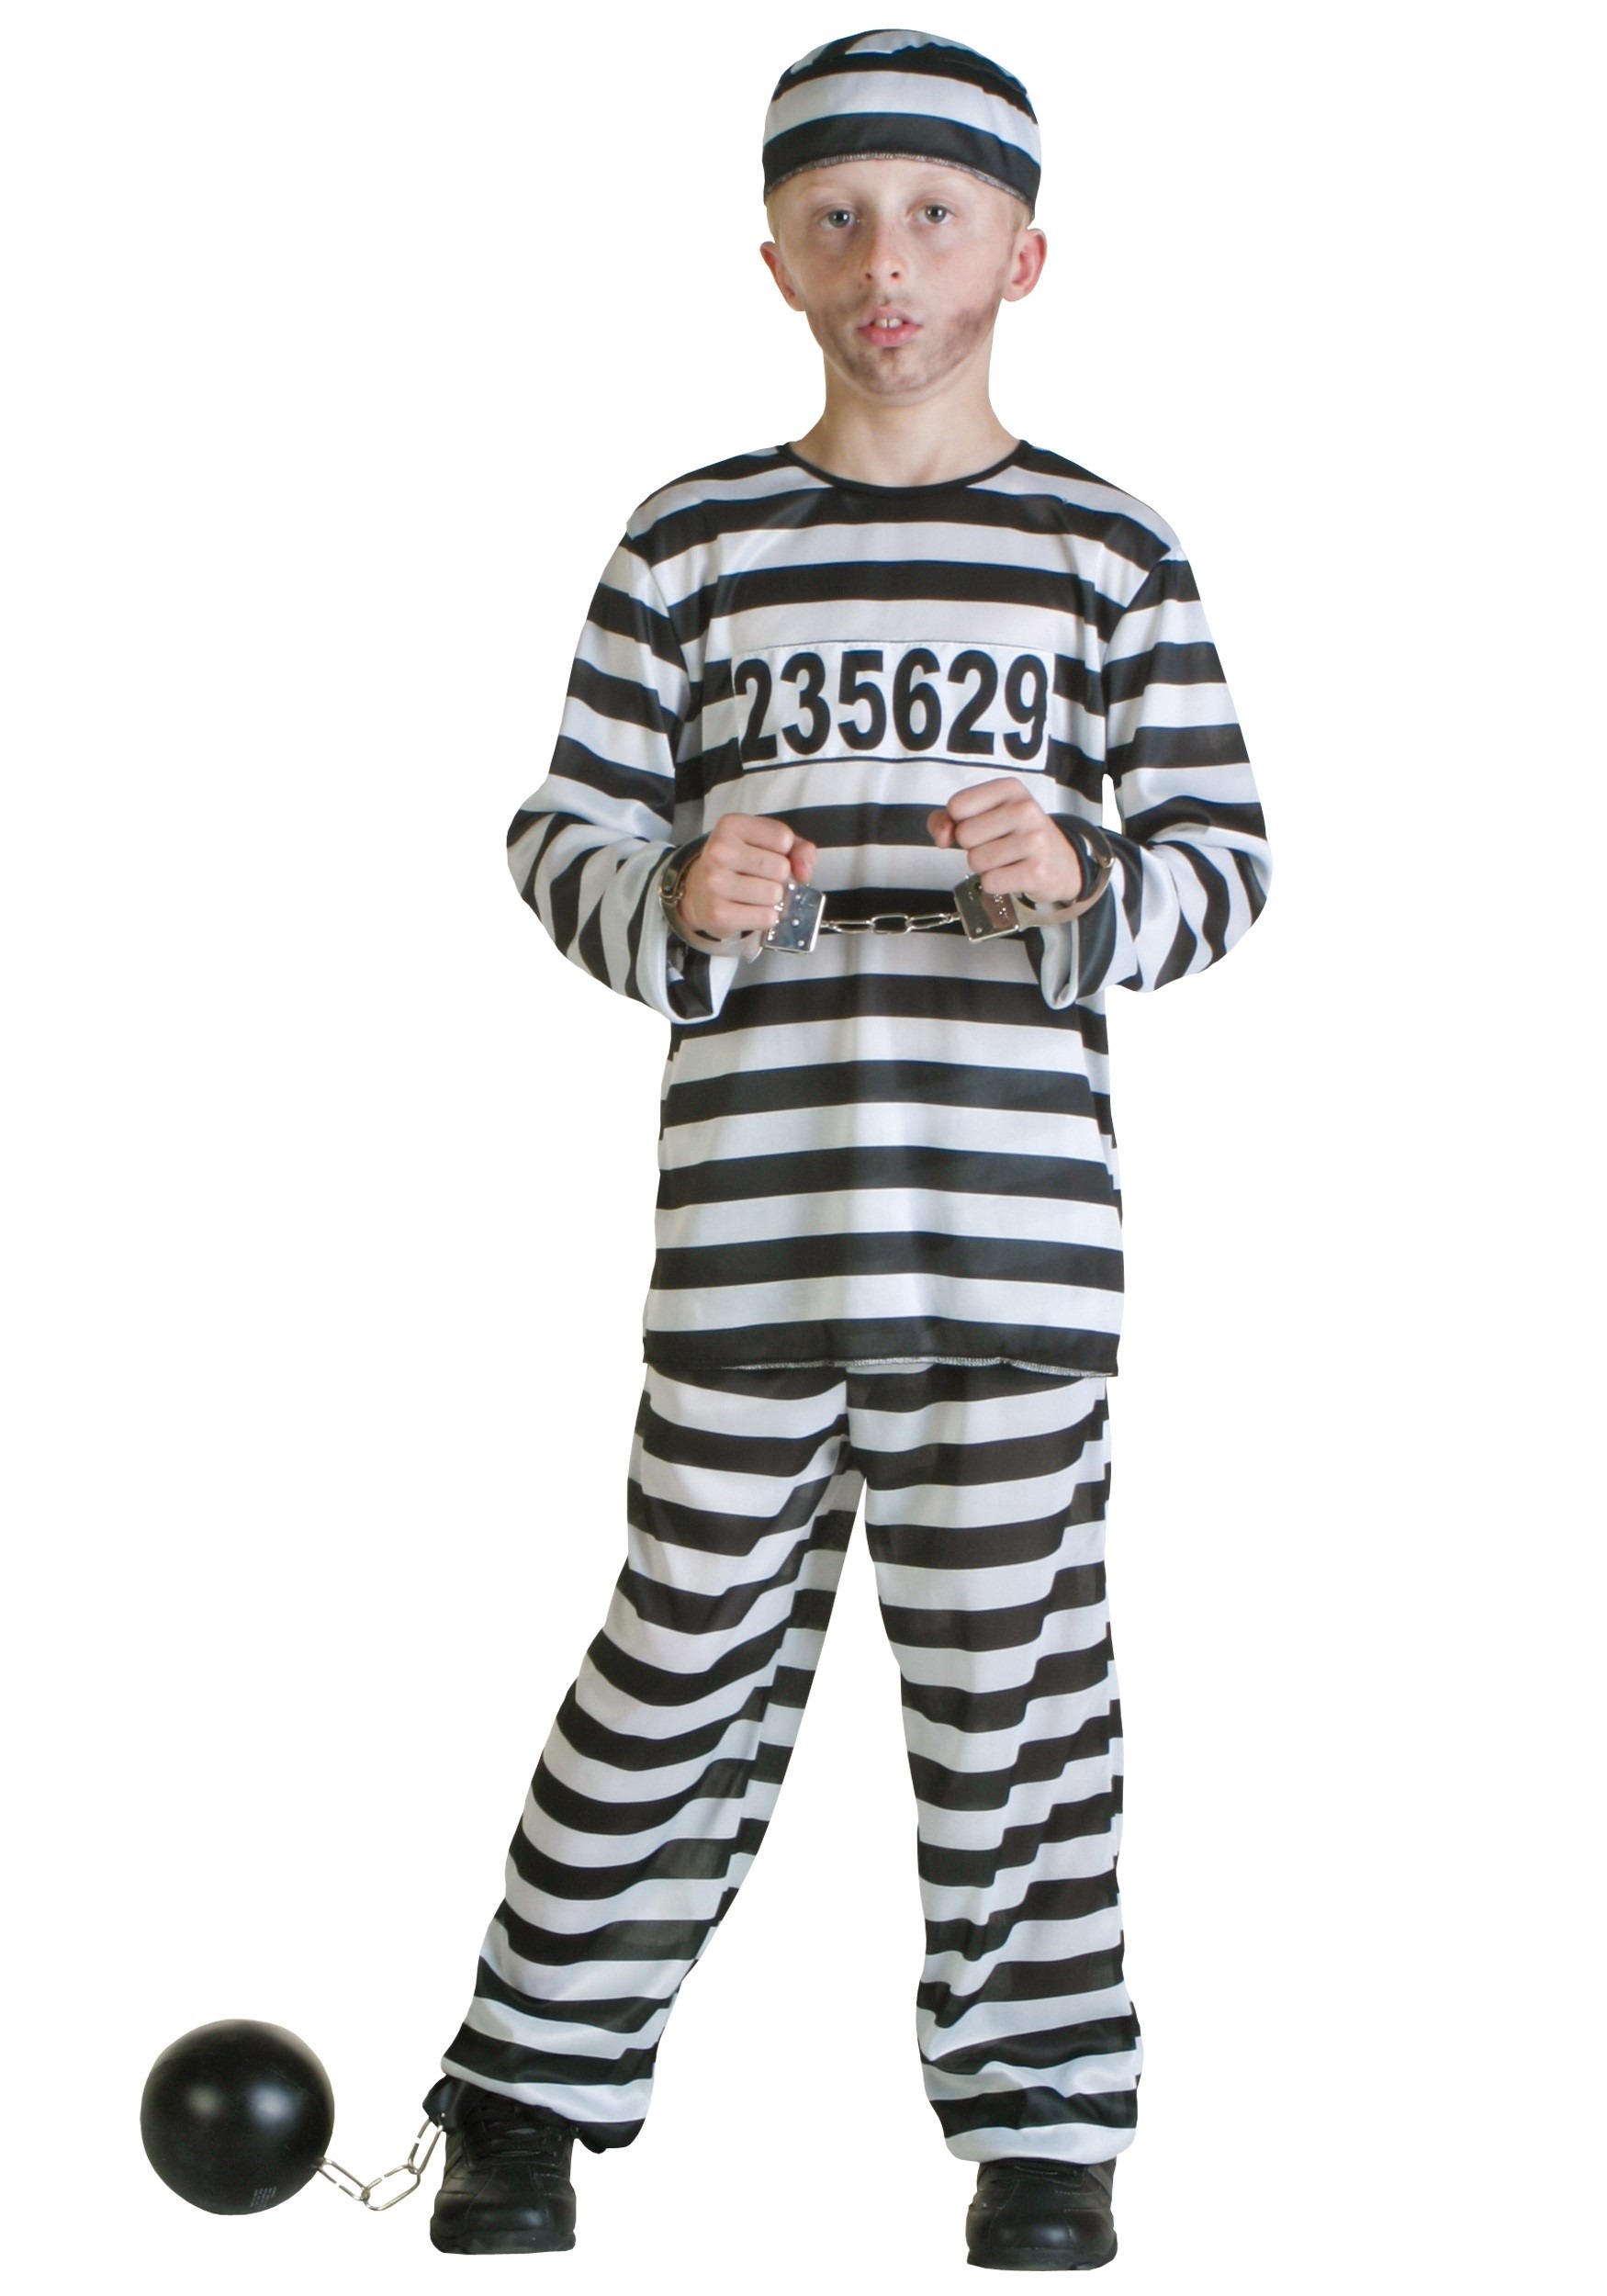 Одежда заключенных